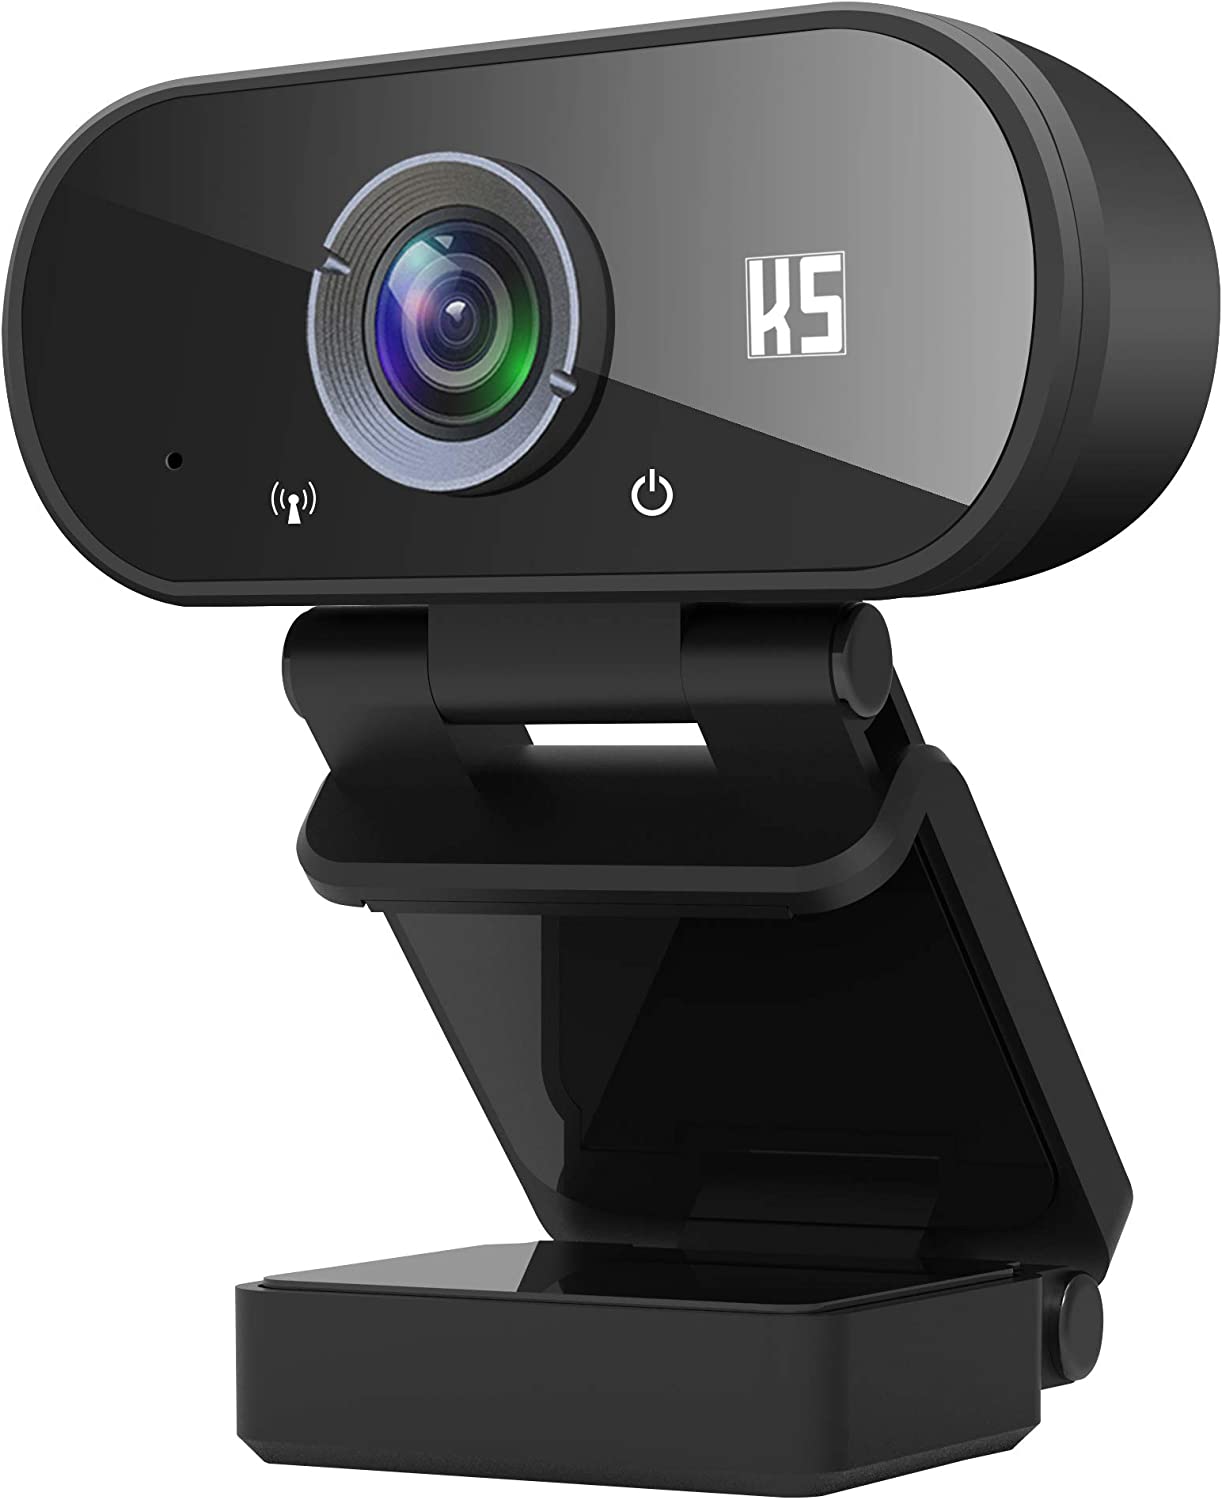 Konnek Stein Webcam HD 1080P 비디오, 내장 마이크, 삼각대 및 개인 정보 보호 커버가 있는 컴퓨터 USB 웹캠, 플러그 앤 플레이, 비디오 통화용 PC 웹캠, 회의, 데스크톱과 호환, 노트북